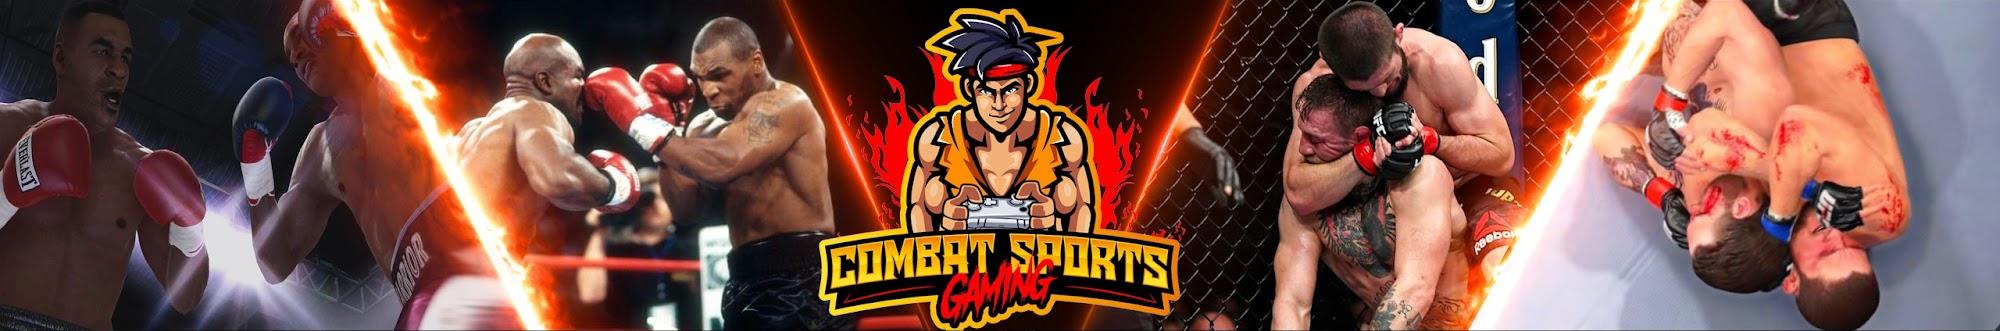 Combat Sports Gaming